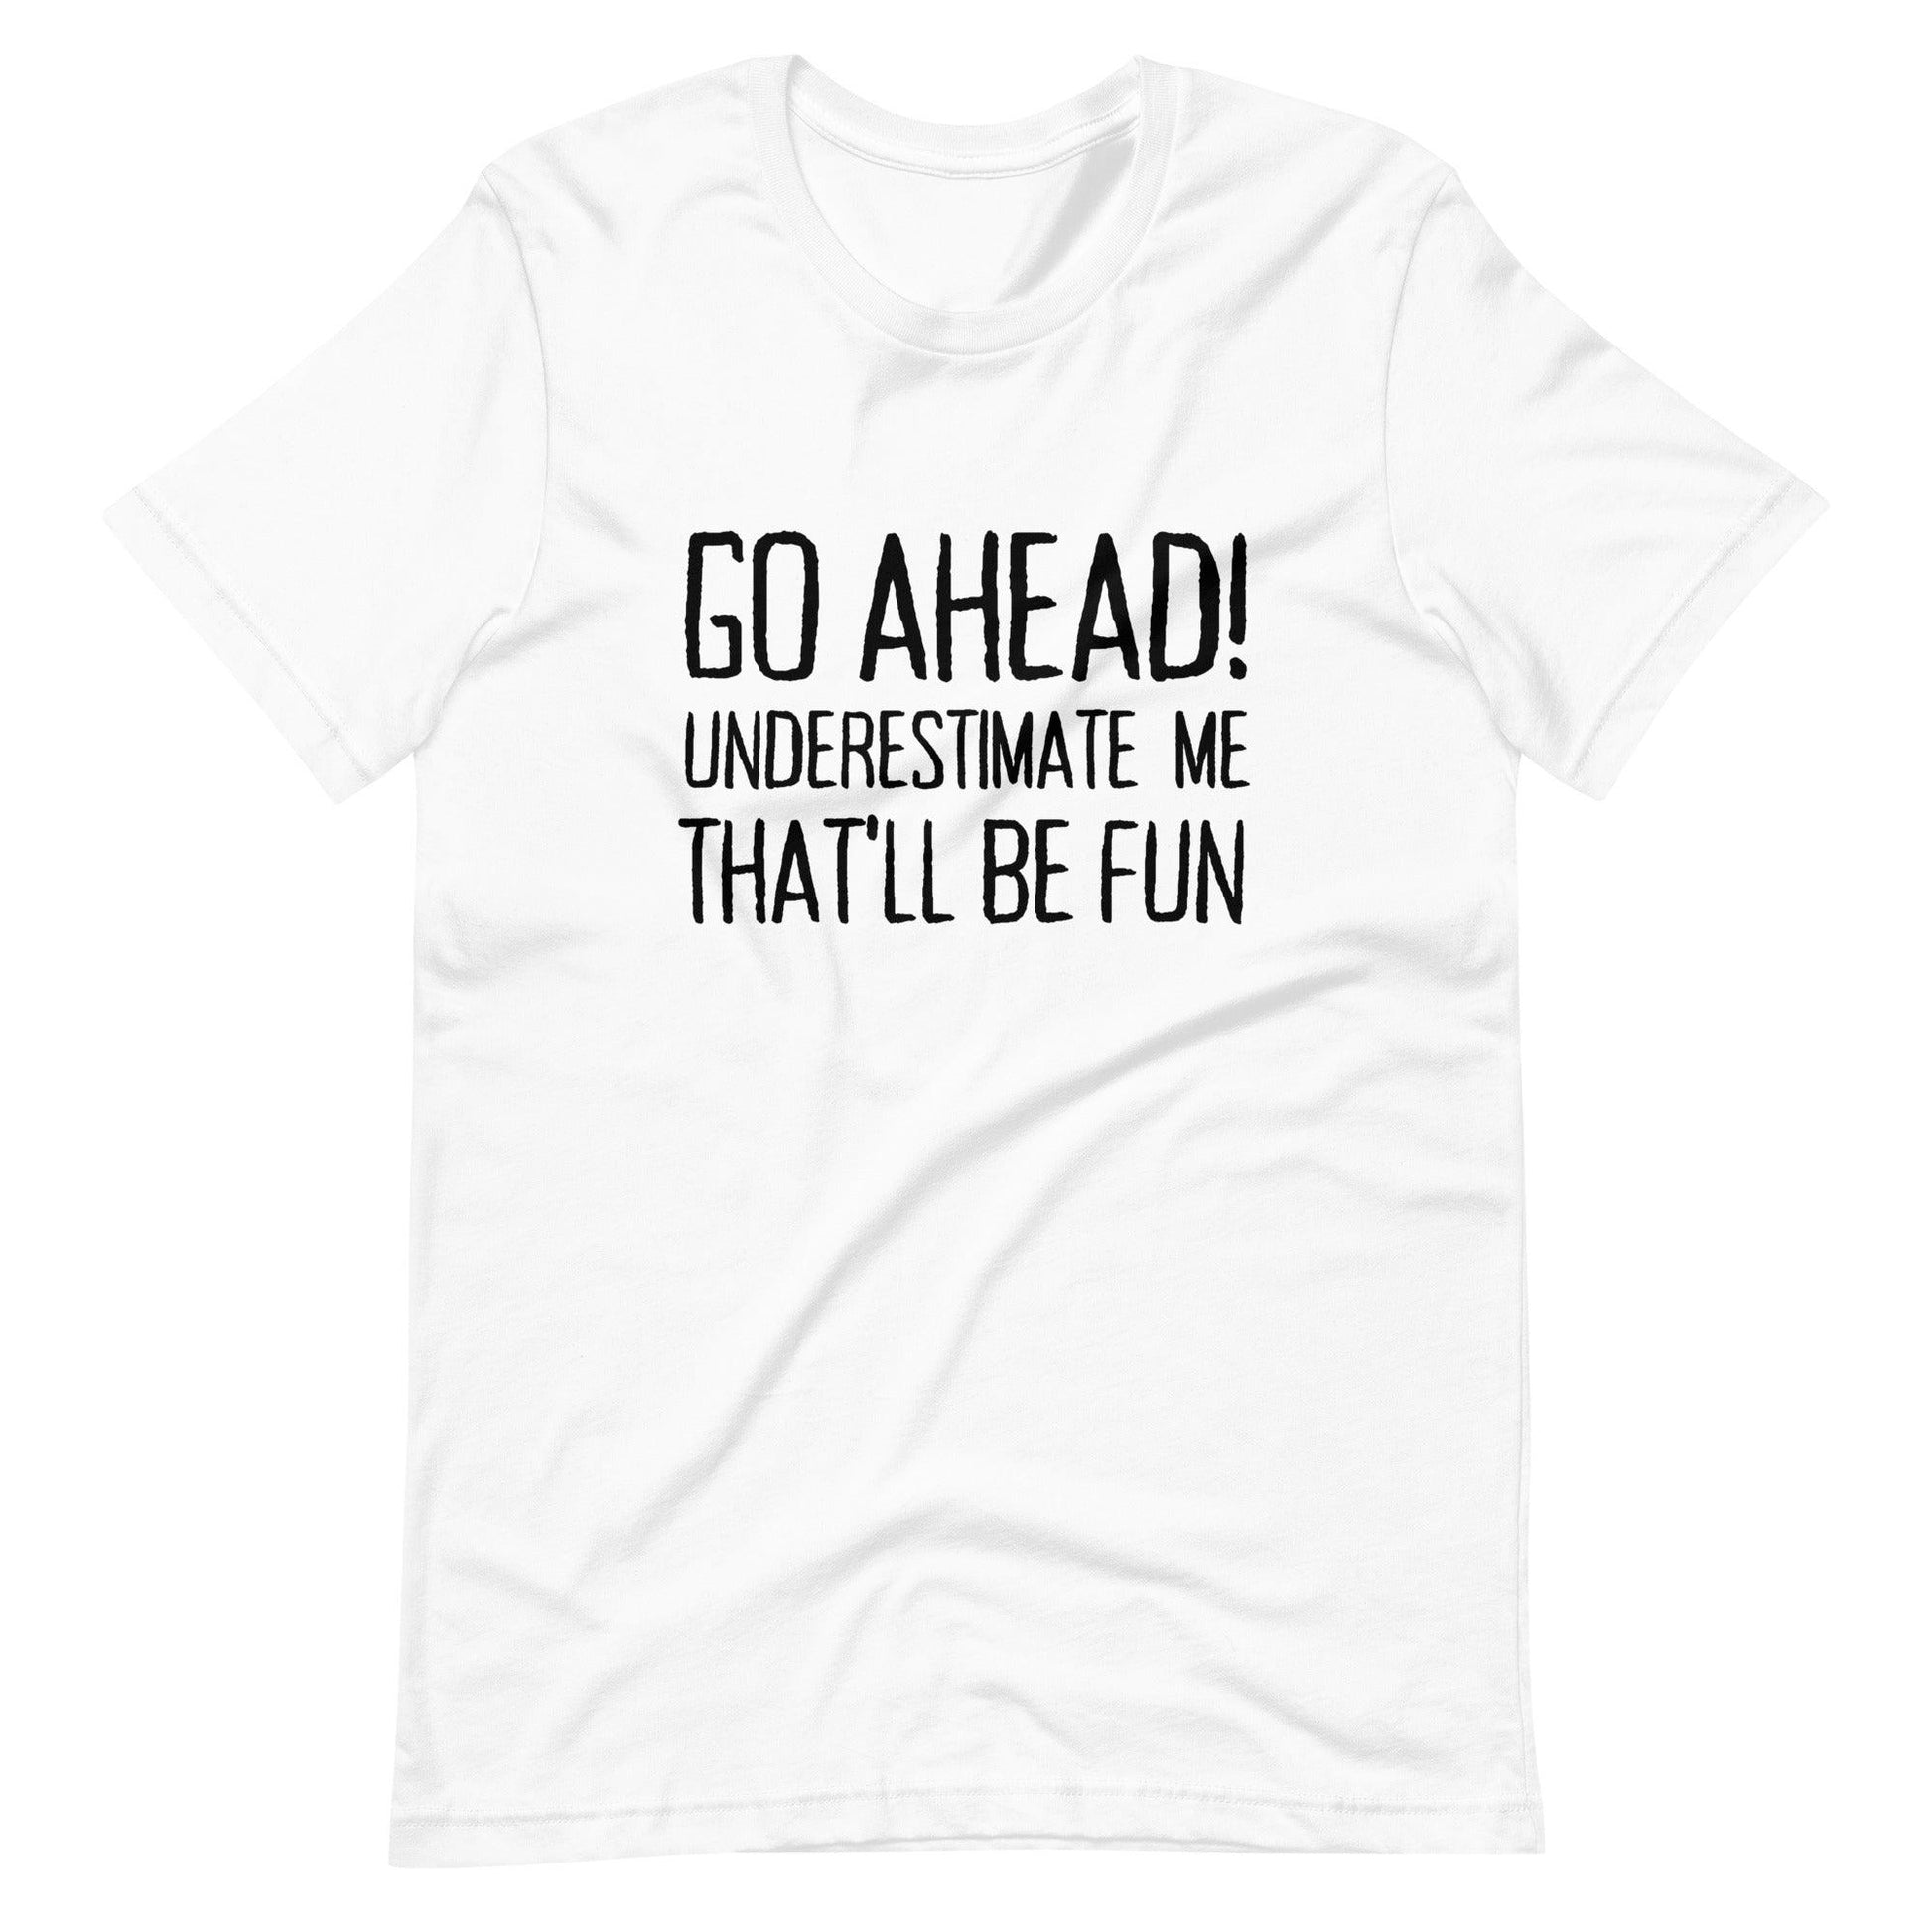 Go Ahead! Underestimate Me That'll Be Fun Unisex T-Shirt, Black Print - TheGivenGet